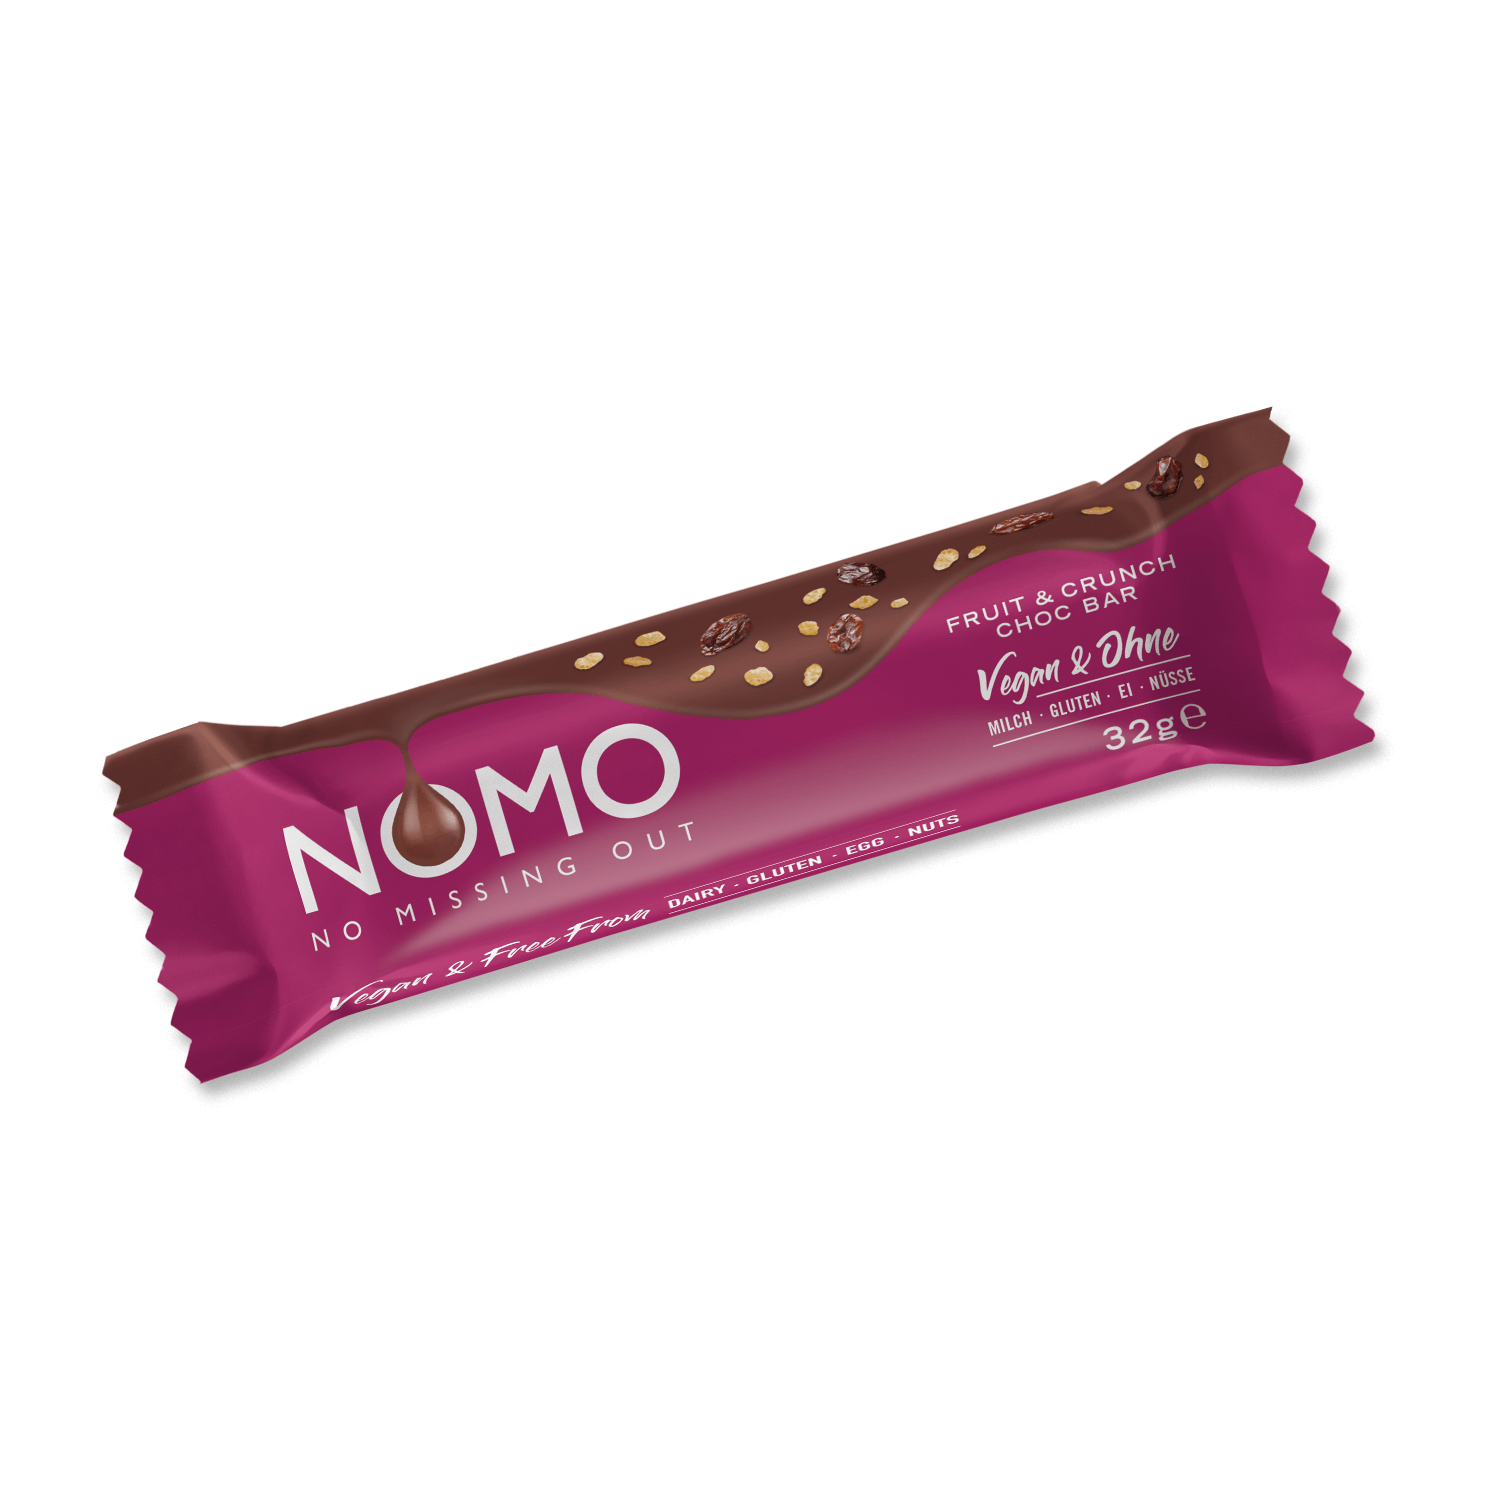 Nomo Fruit Crunch Schokoriegel. NOMO - NO MISSING OUT. Vegane Schokolade. Vegane Schokoriegel. Glutenfrei, Eifrei, Milchfrei, laktosefrei, Nussfrei. Nachhaltige Schokolade